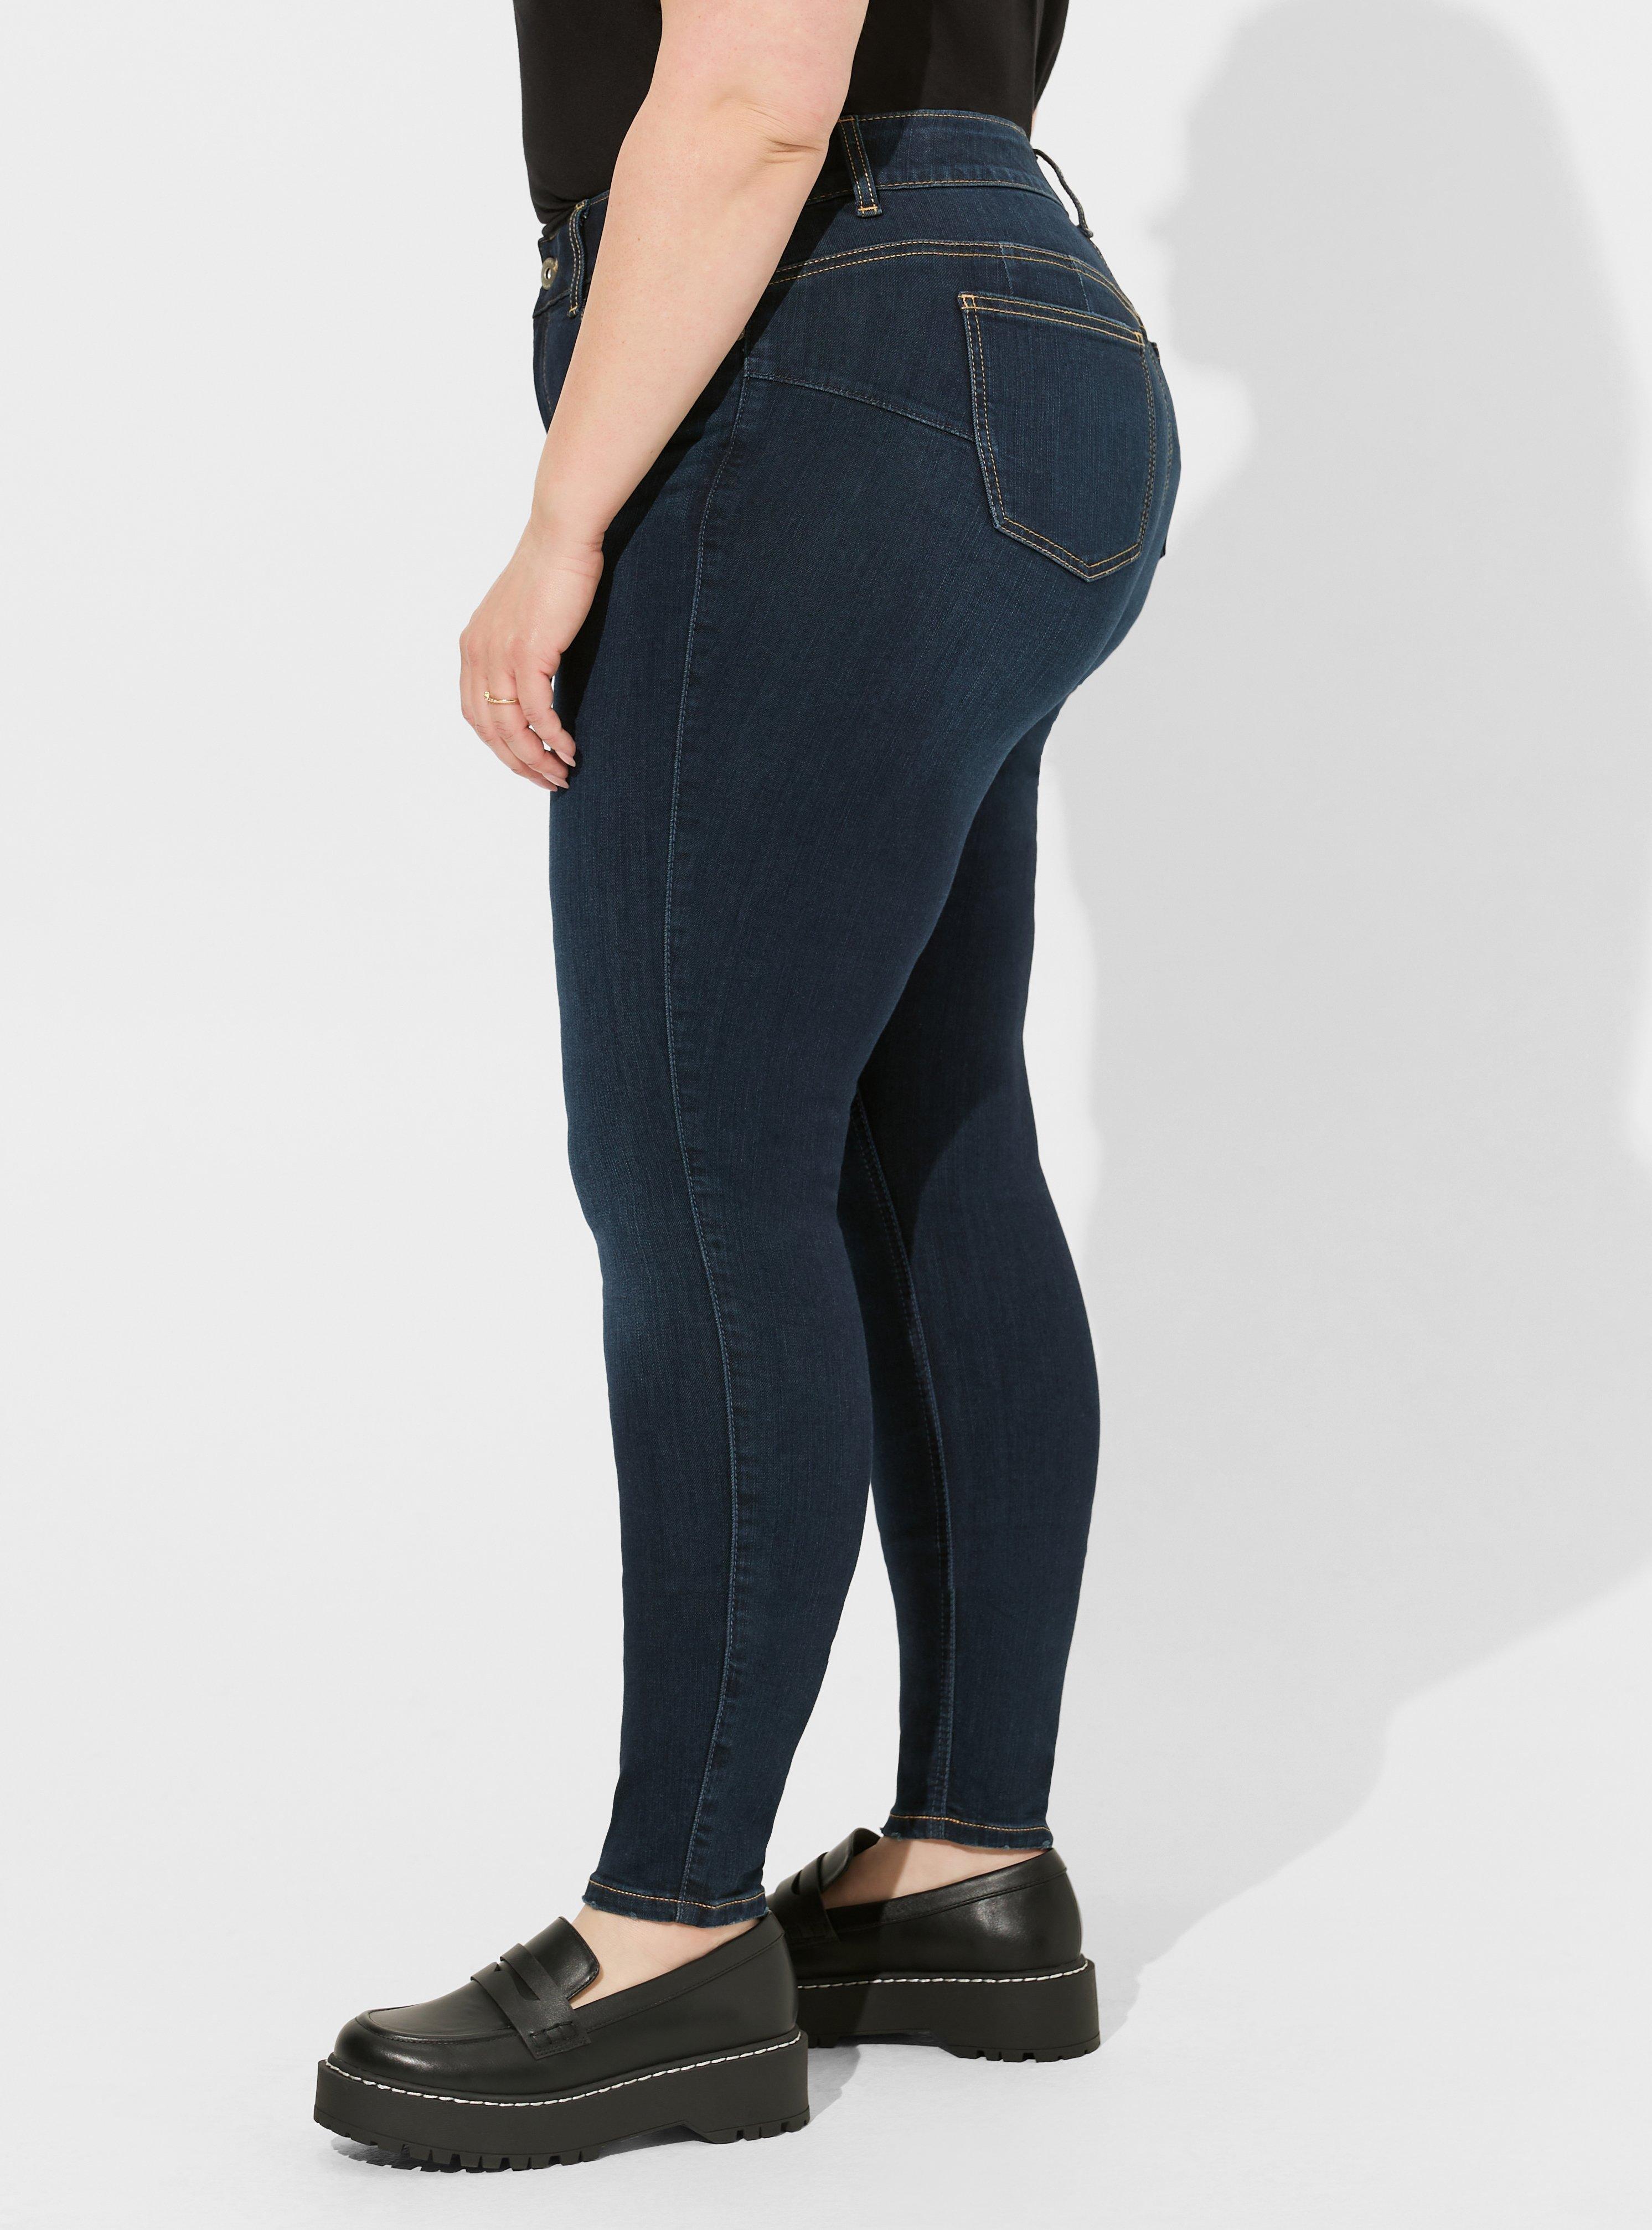 Torrid Sky High Skinny Jeans Plus Size 26 Distressed Denim Premium Stretch  Black